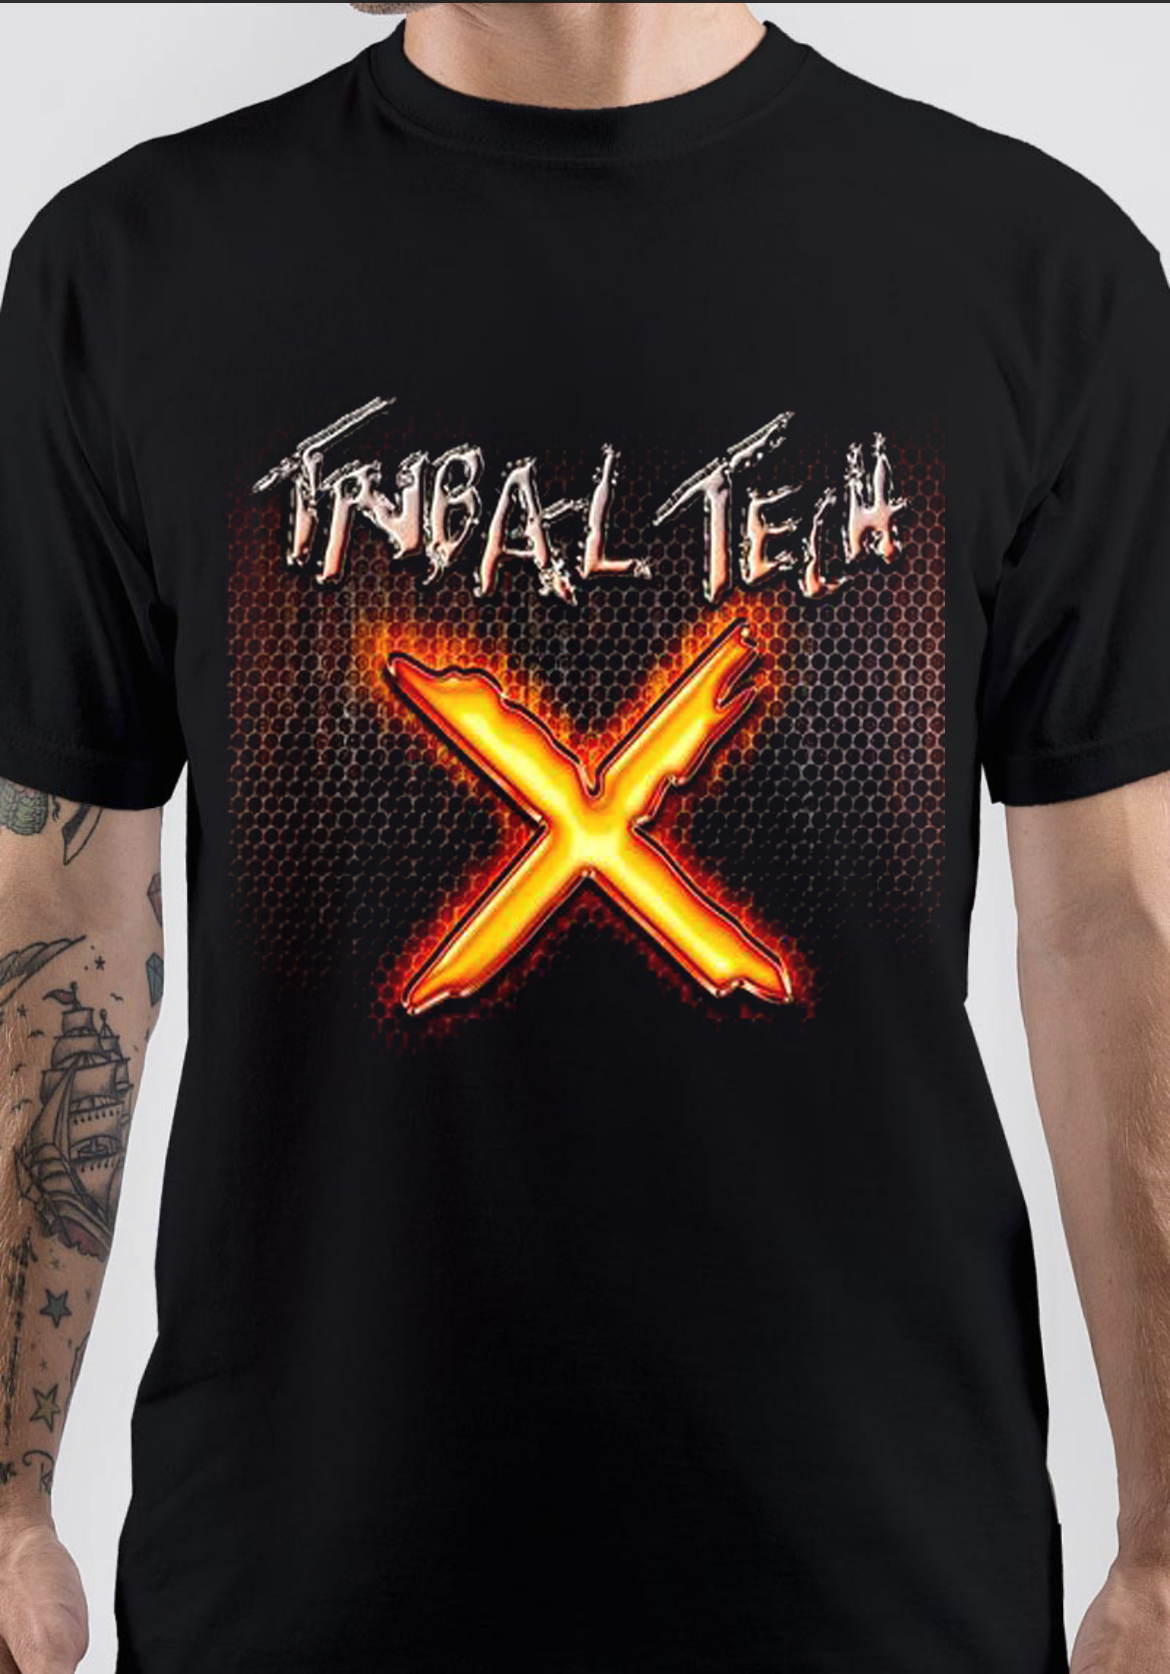 Tribal Tech T-Shirt And Merchandise